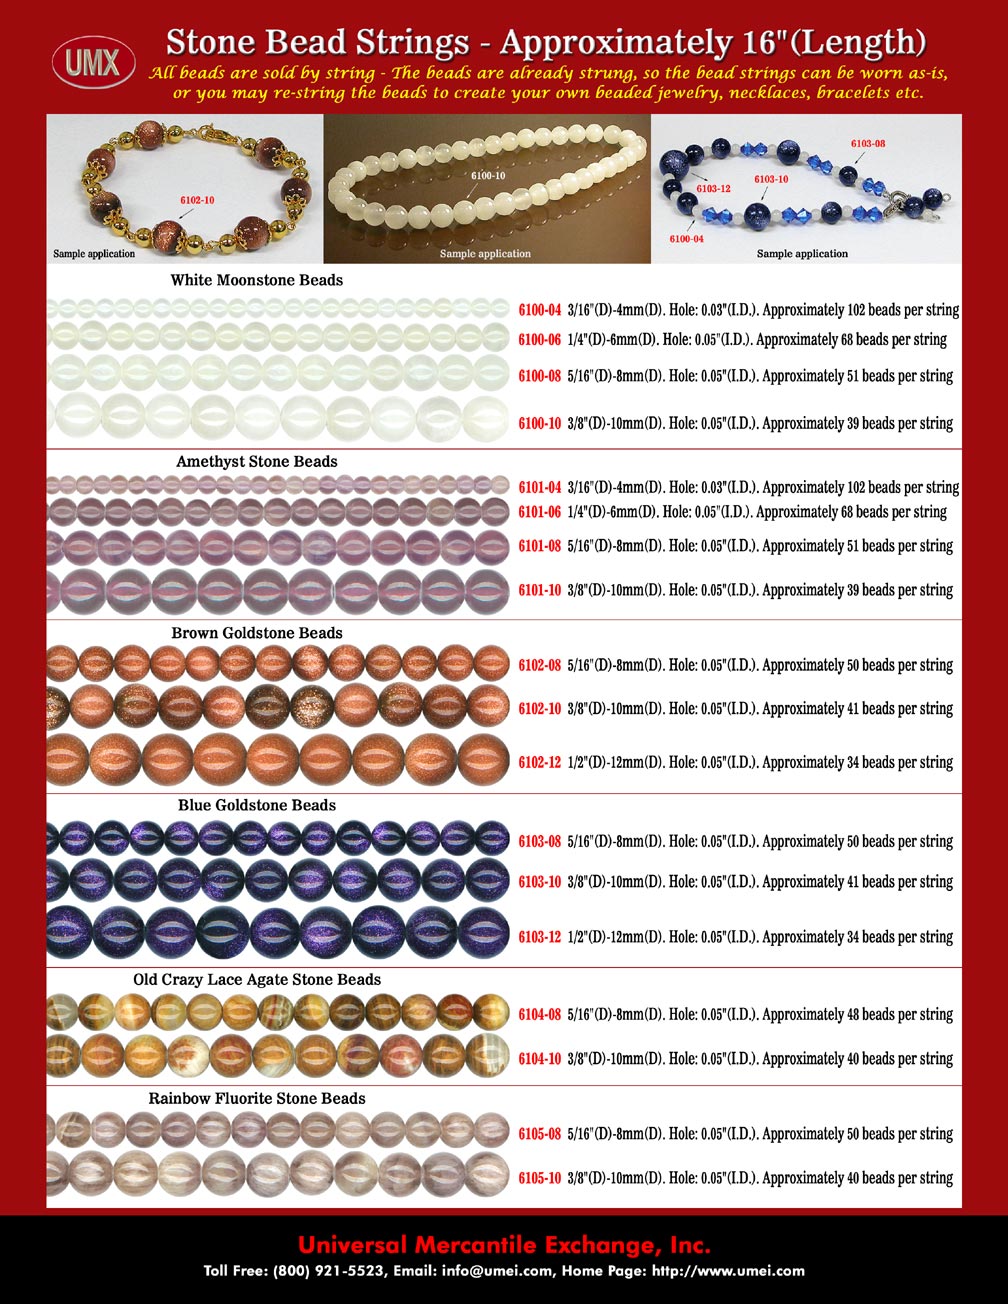 Wholesale Stone Beads Catalogs: Stone Beads and Stone Bead Supply.